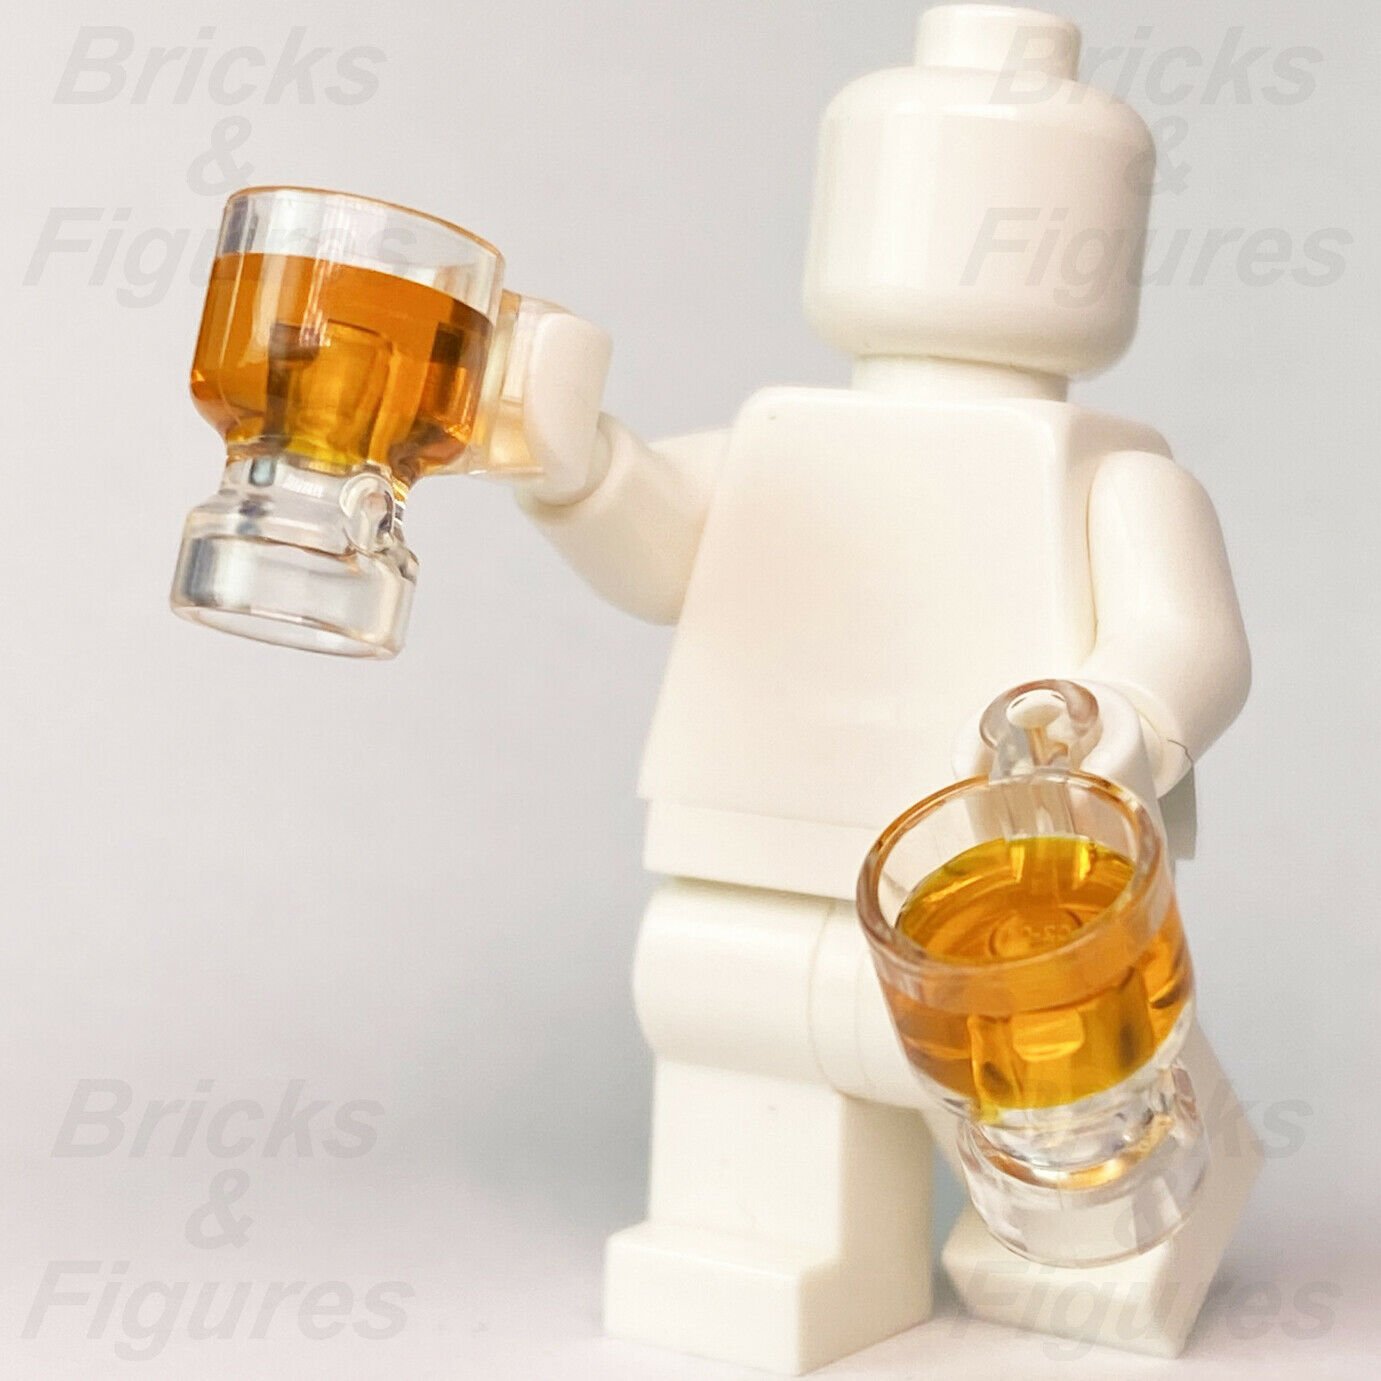 2 x Harry Potter LEGO Stein Cup Drink Pattern Orange Minifigure Part 76388 - Bricks & Figures